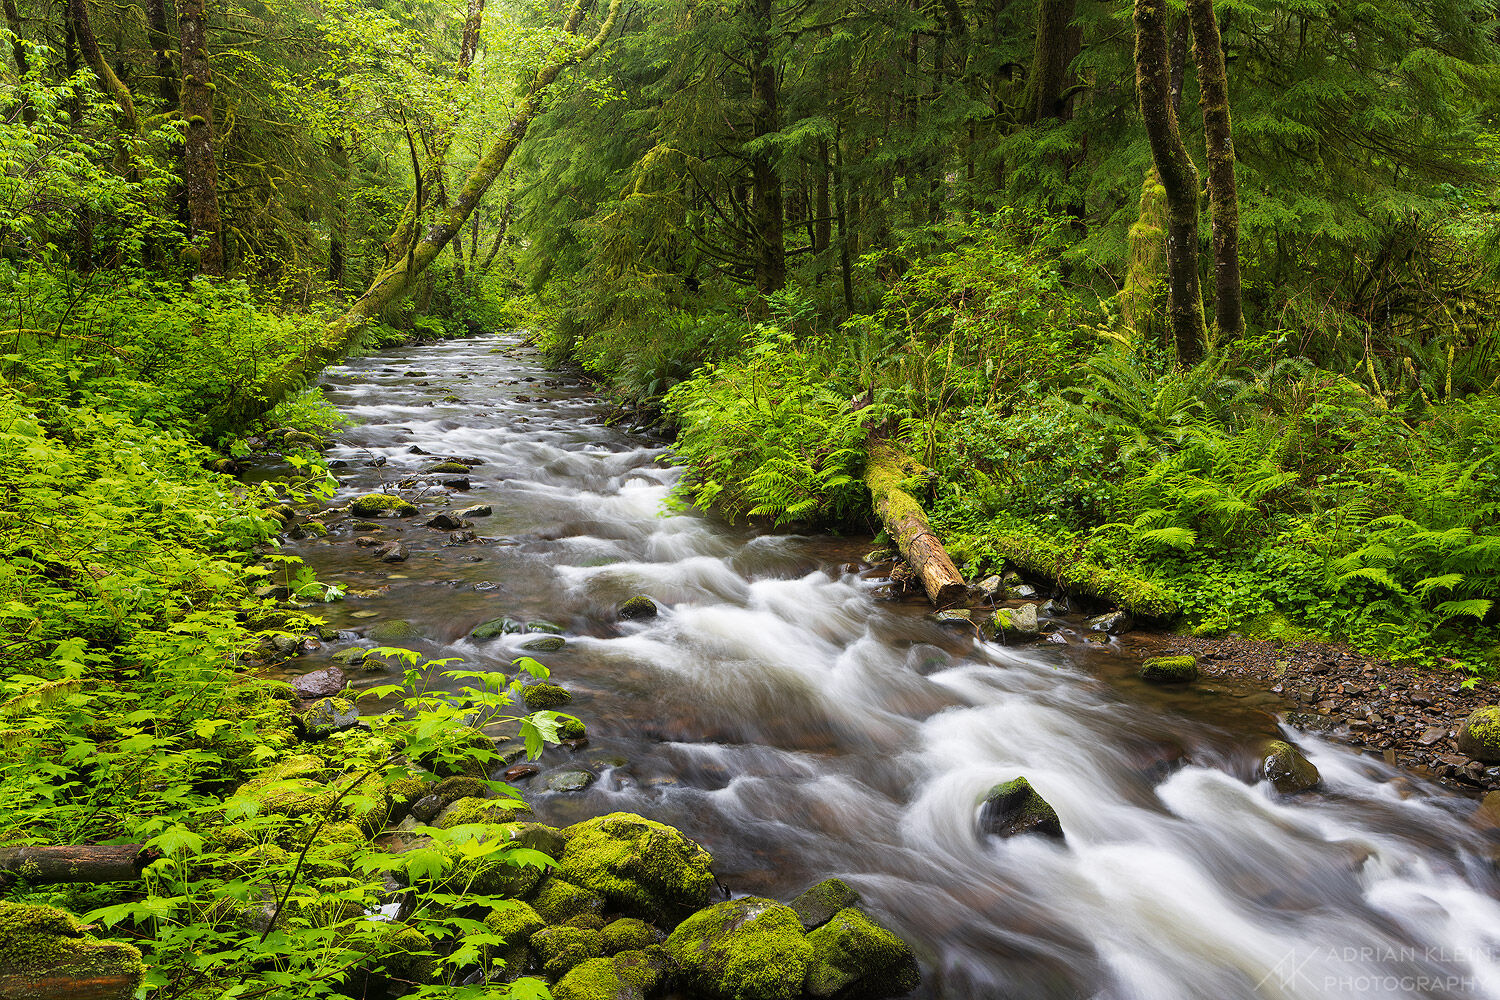 A stream near the coast of Oregon flows steady during spring season from rain and mountain snow melt as the green vegetation...